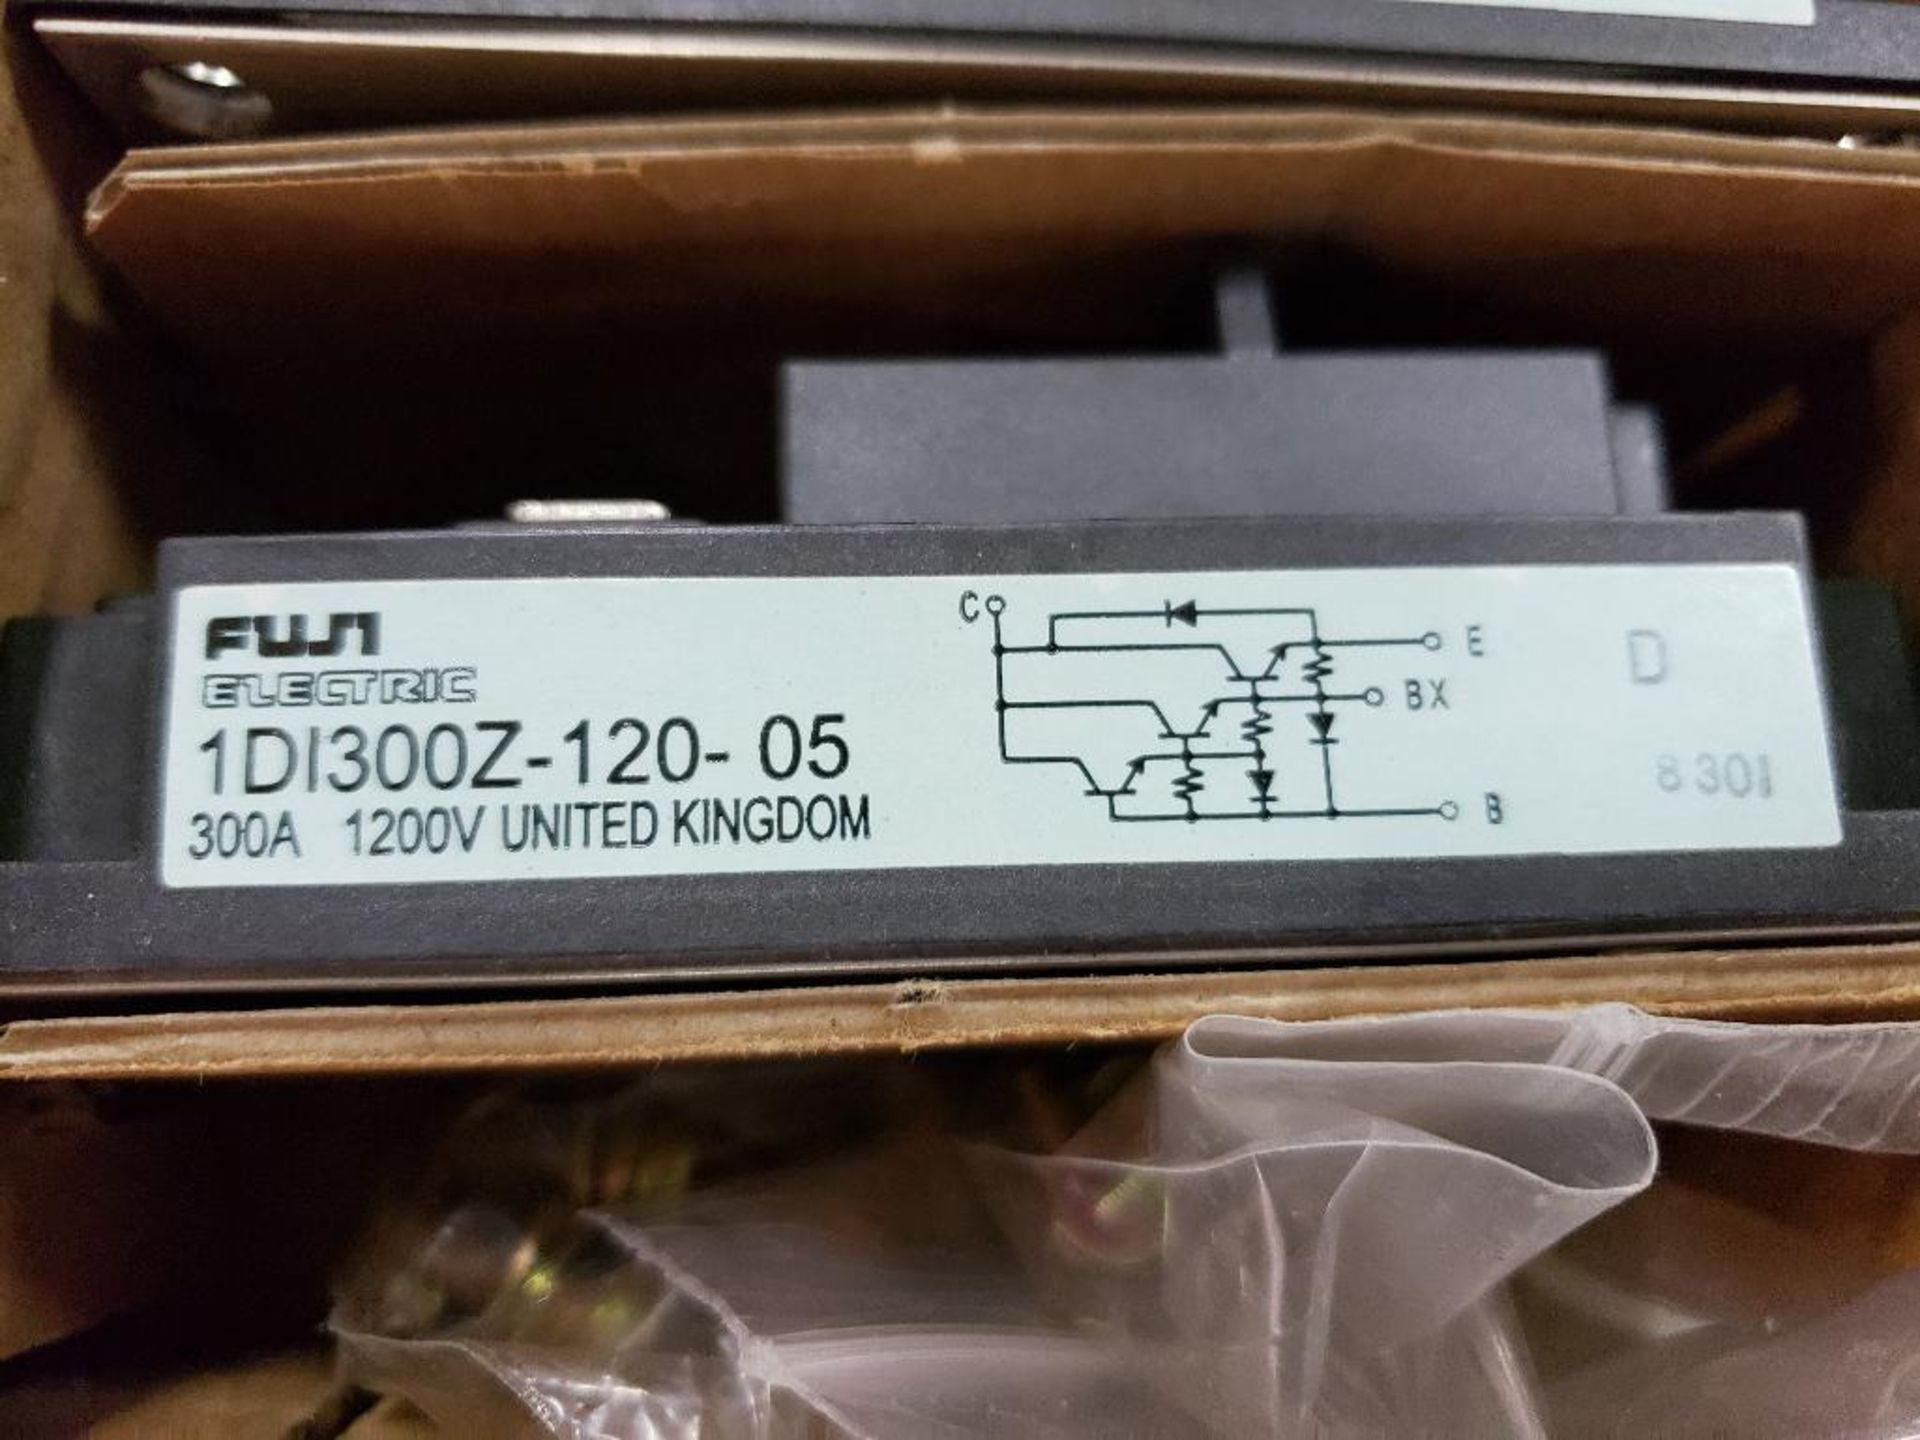 Qty 10 - Fuji Electric transistor module. Model 1DI300Z-120-05. New in bulk box. - Image 3 of 3